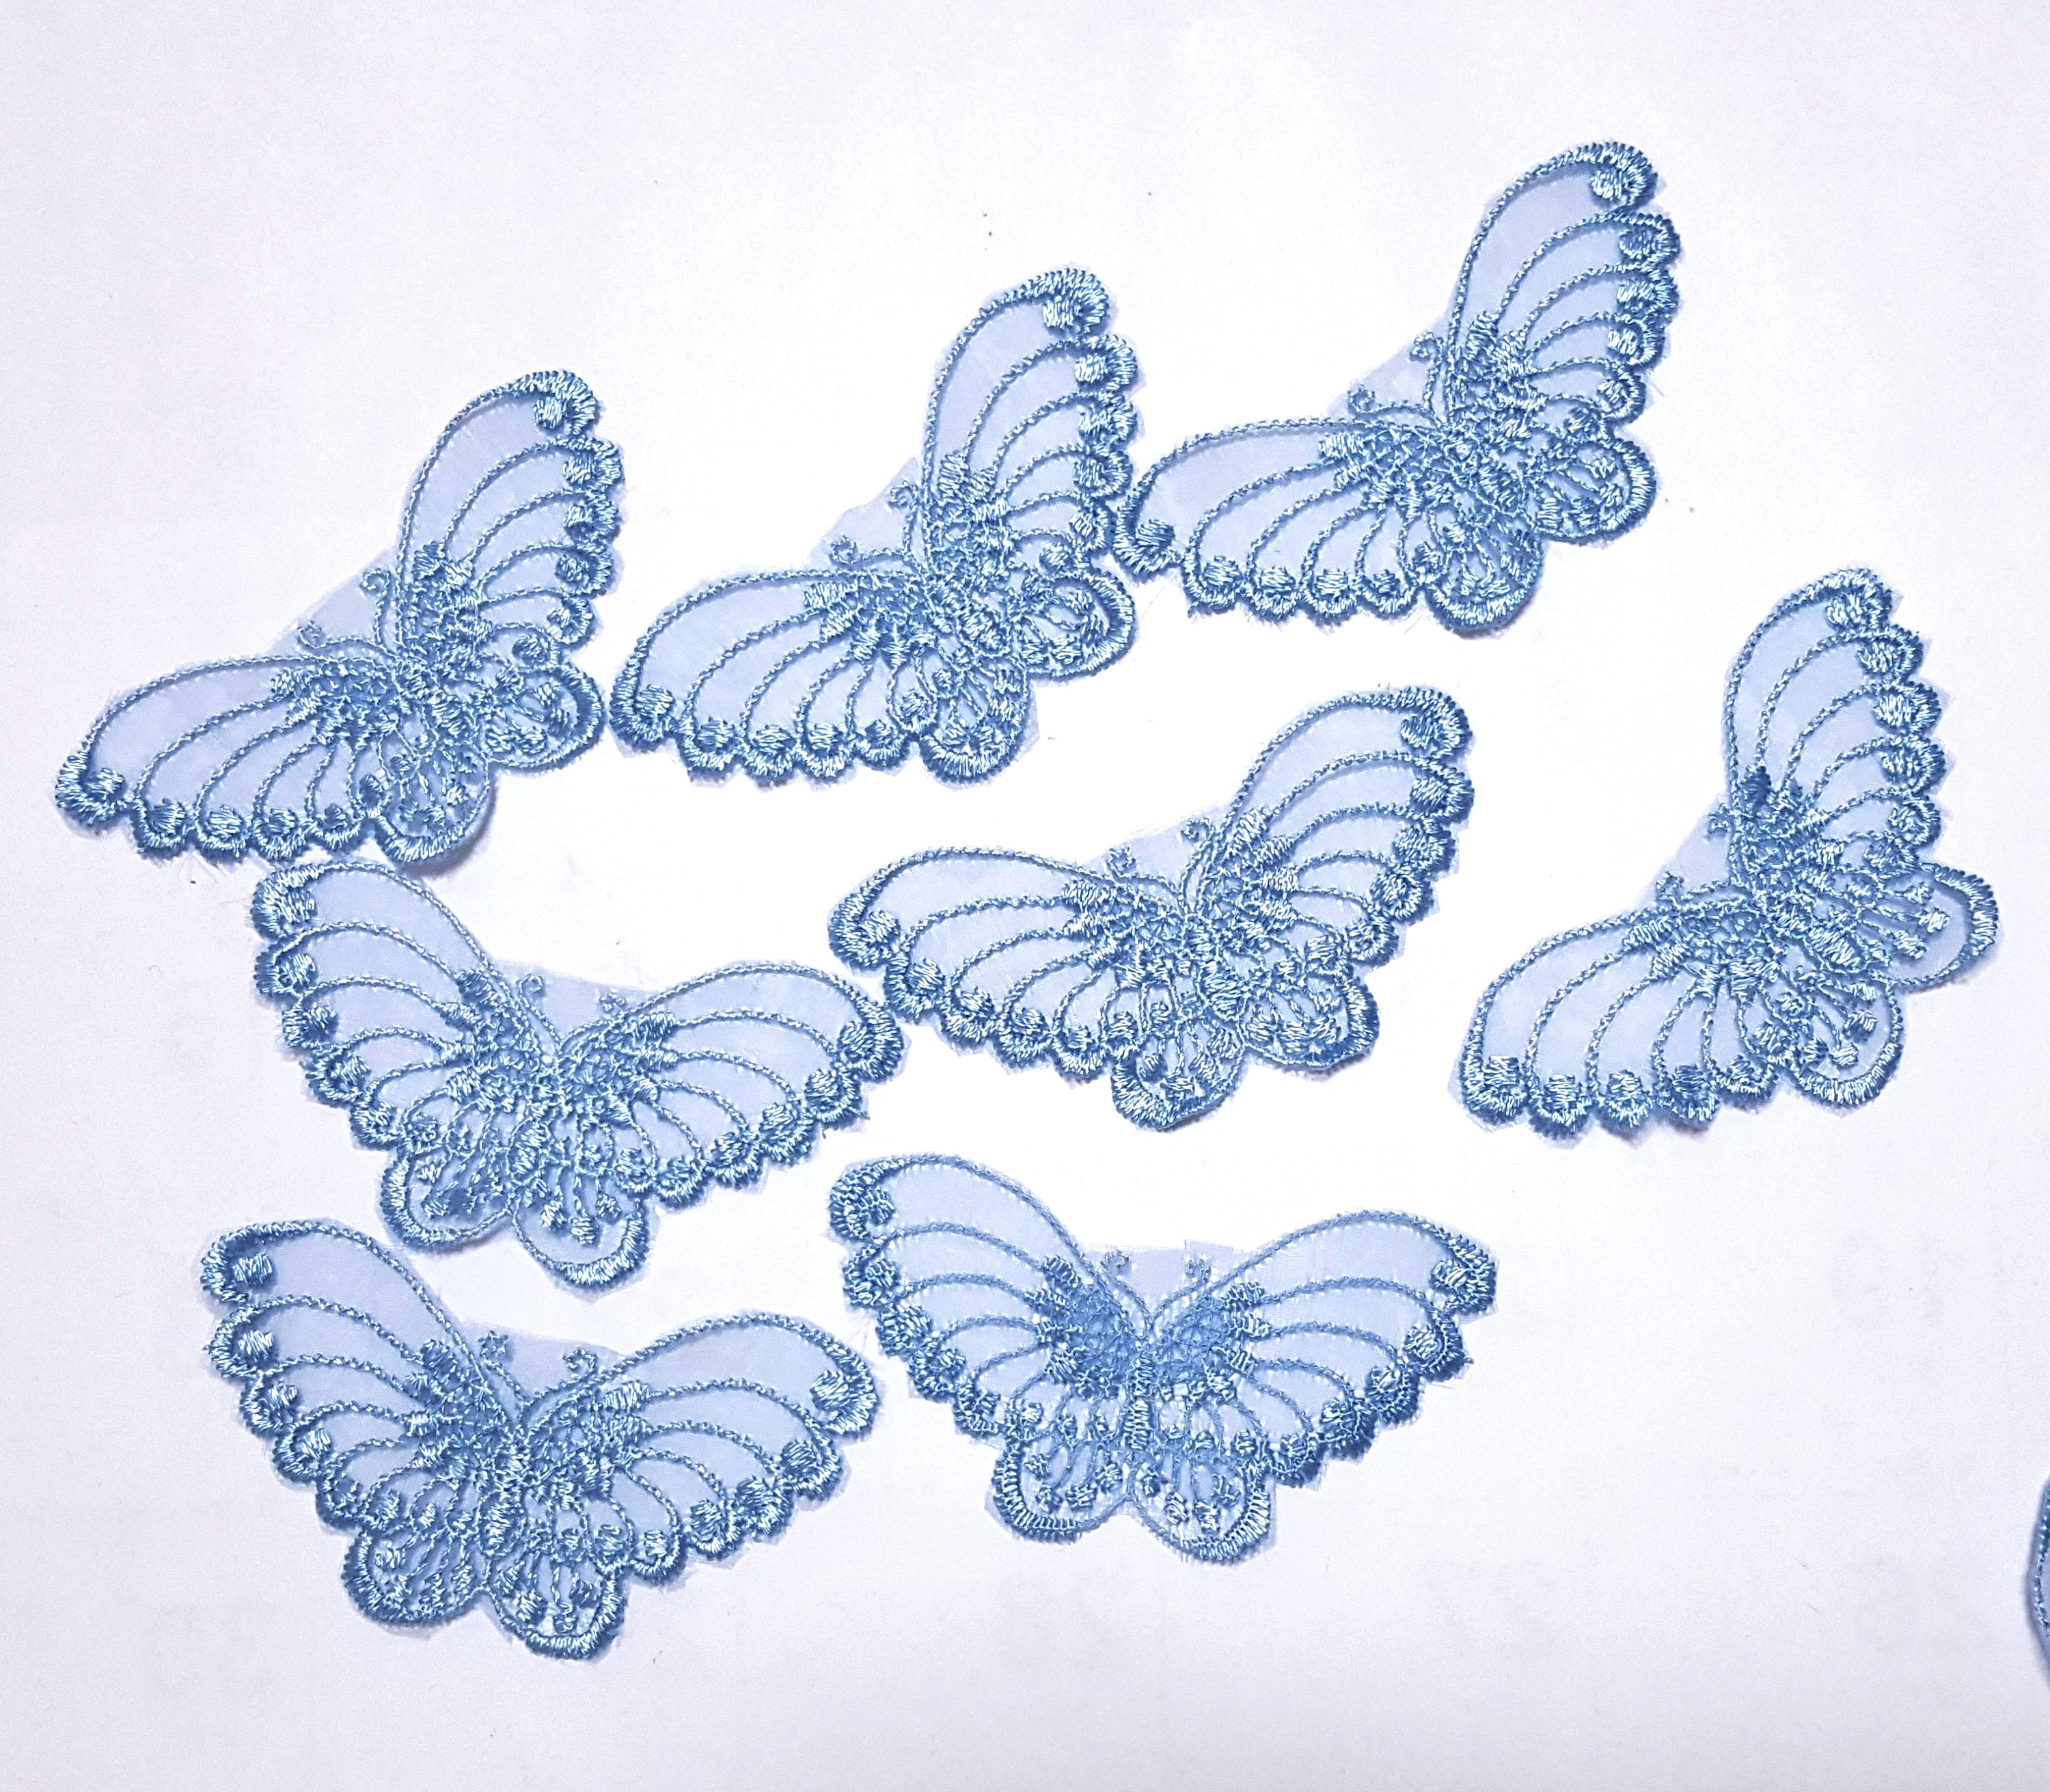 5 Pieces Butterfly Lace Applique Light Blue Terylene Embroidered Lace Patch 4.5x3.5cm LACE575